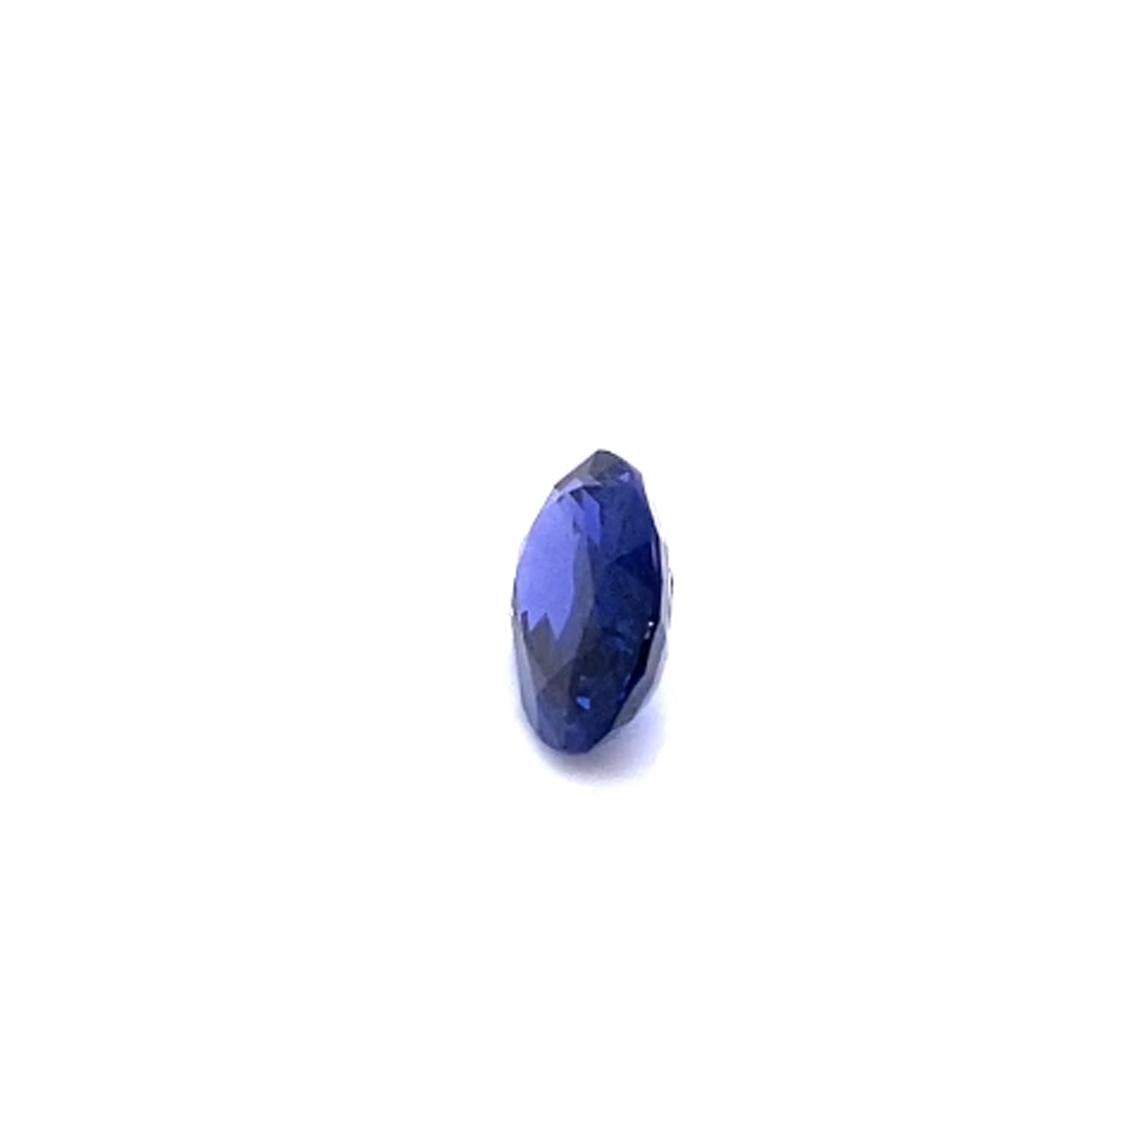 Women's or Men's Bellerophon Gemlab Certified 4.34ct Blue Sapphire Natural Gemstone For Sale